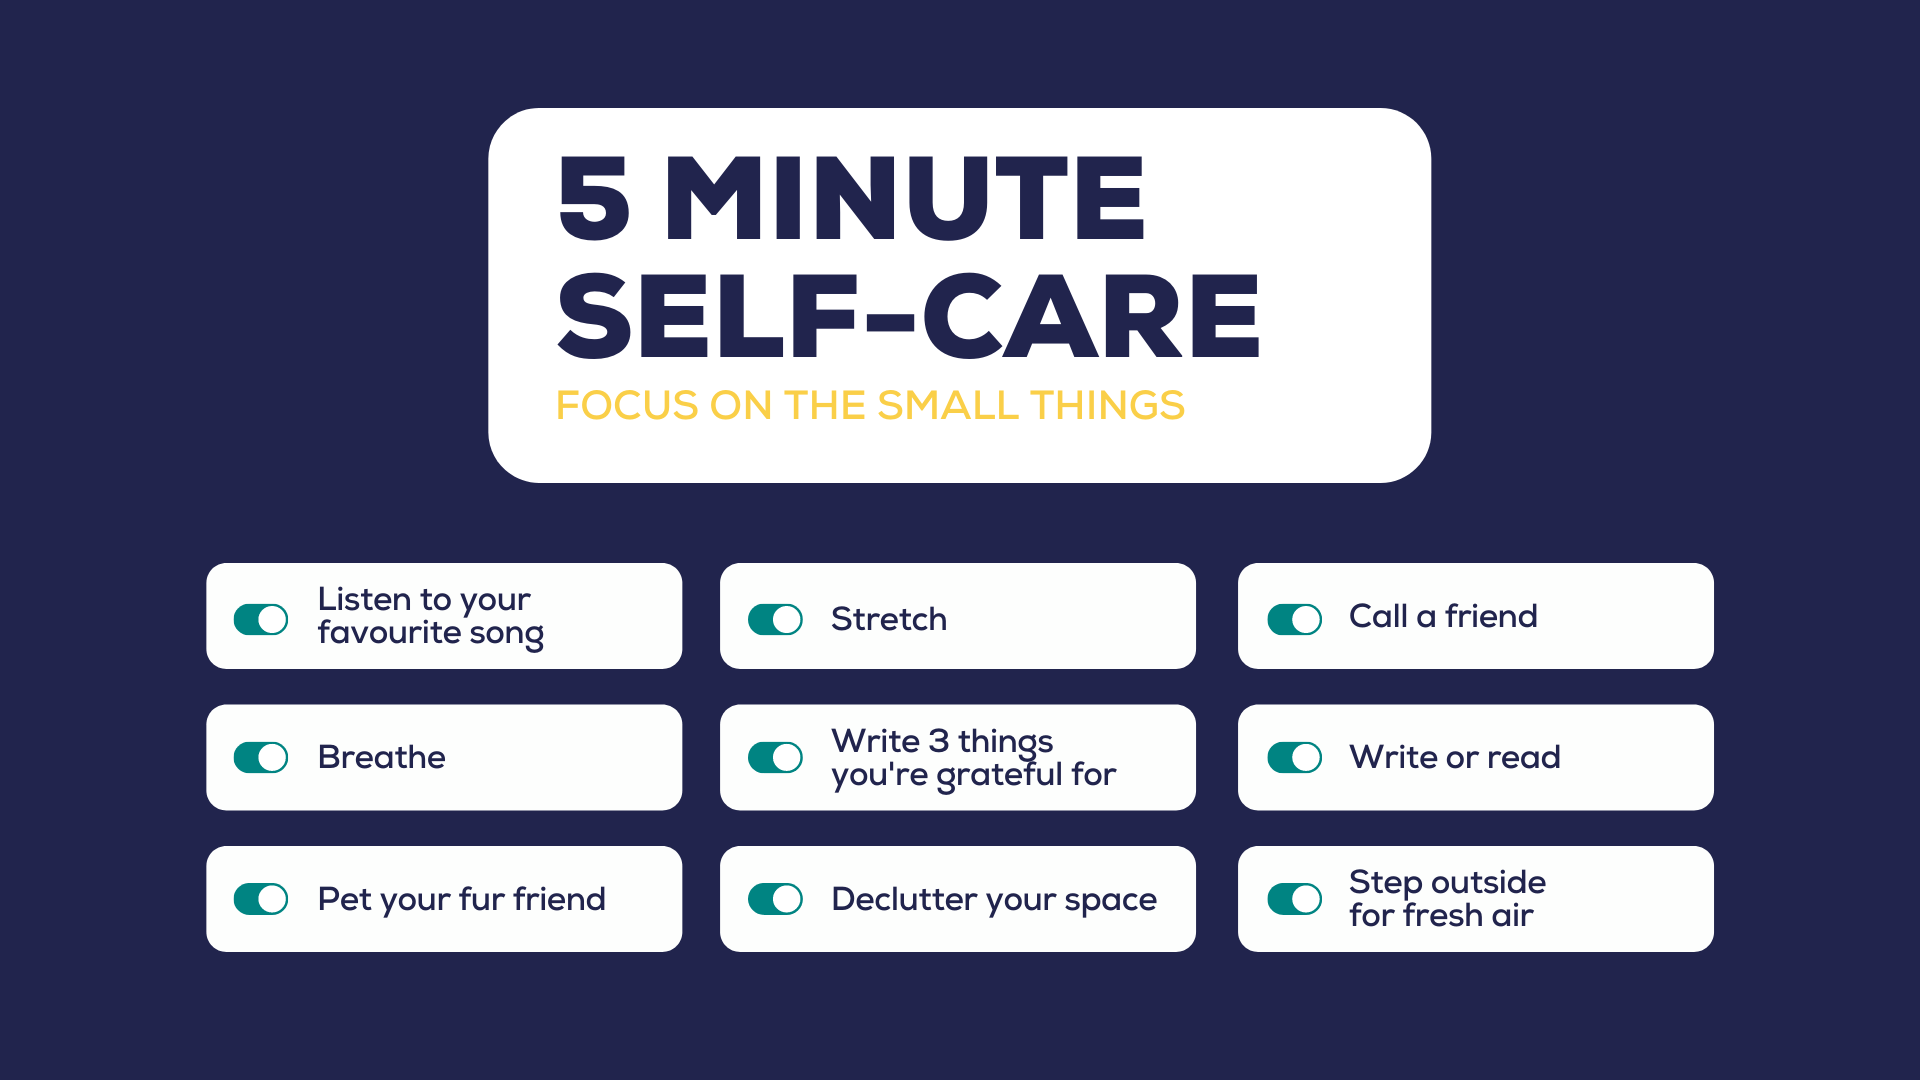 5 Minute Self-Care Ideas